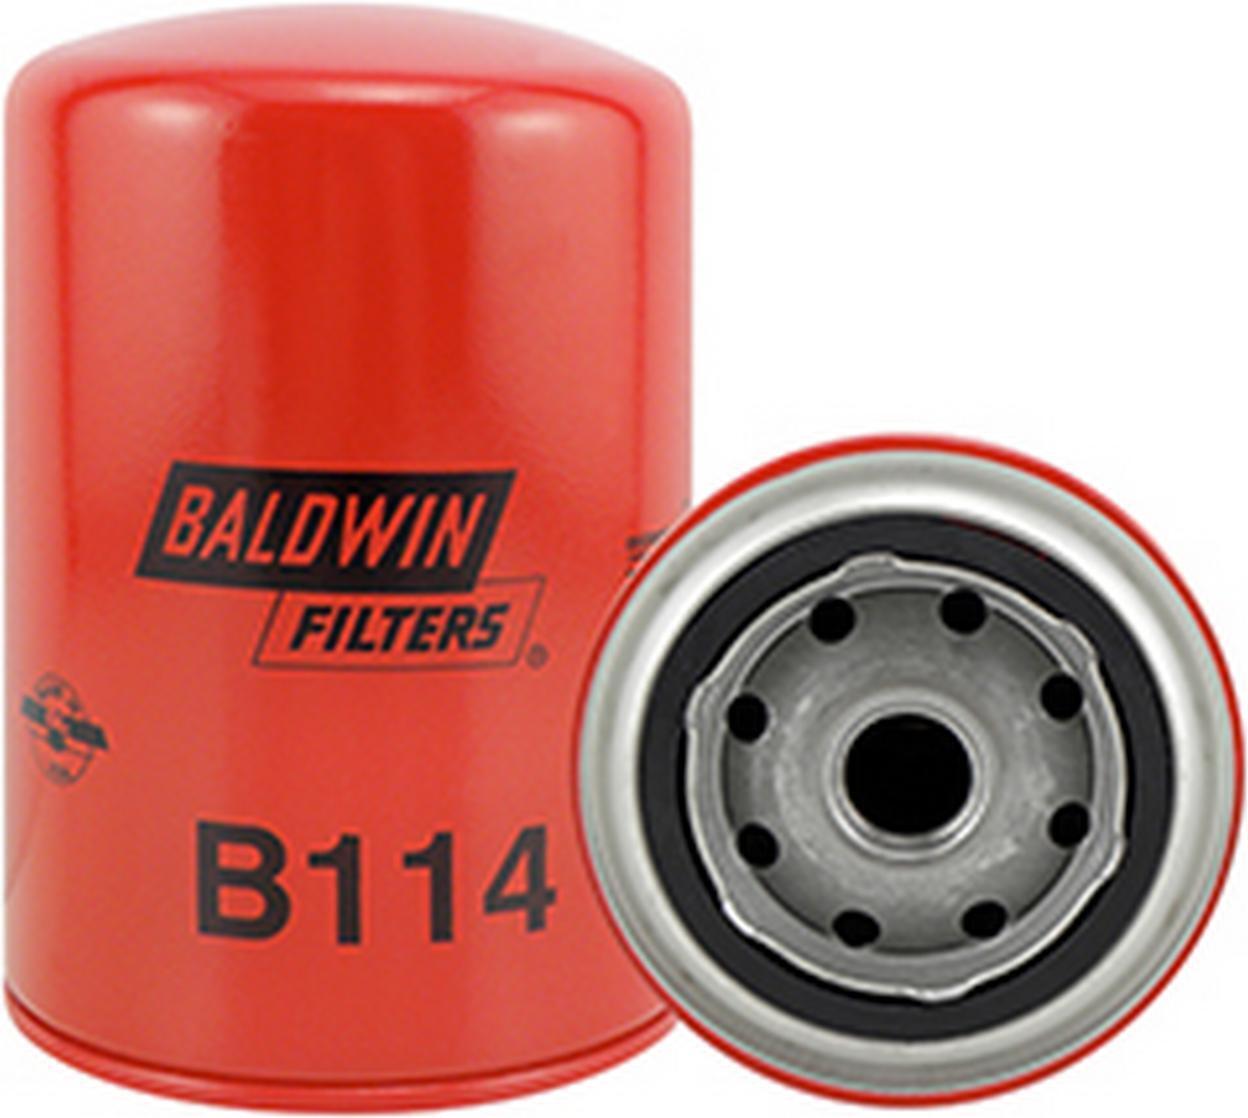 Baldwin B114 Full-Flow Lube Spin-on